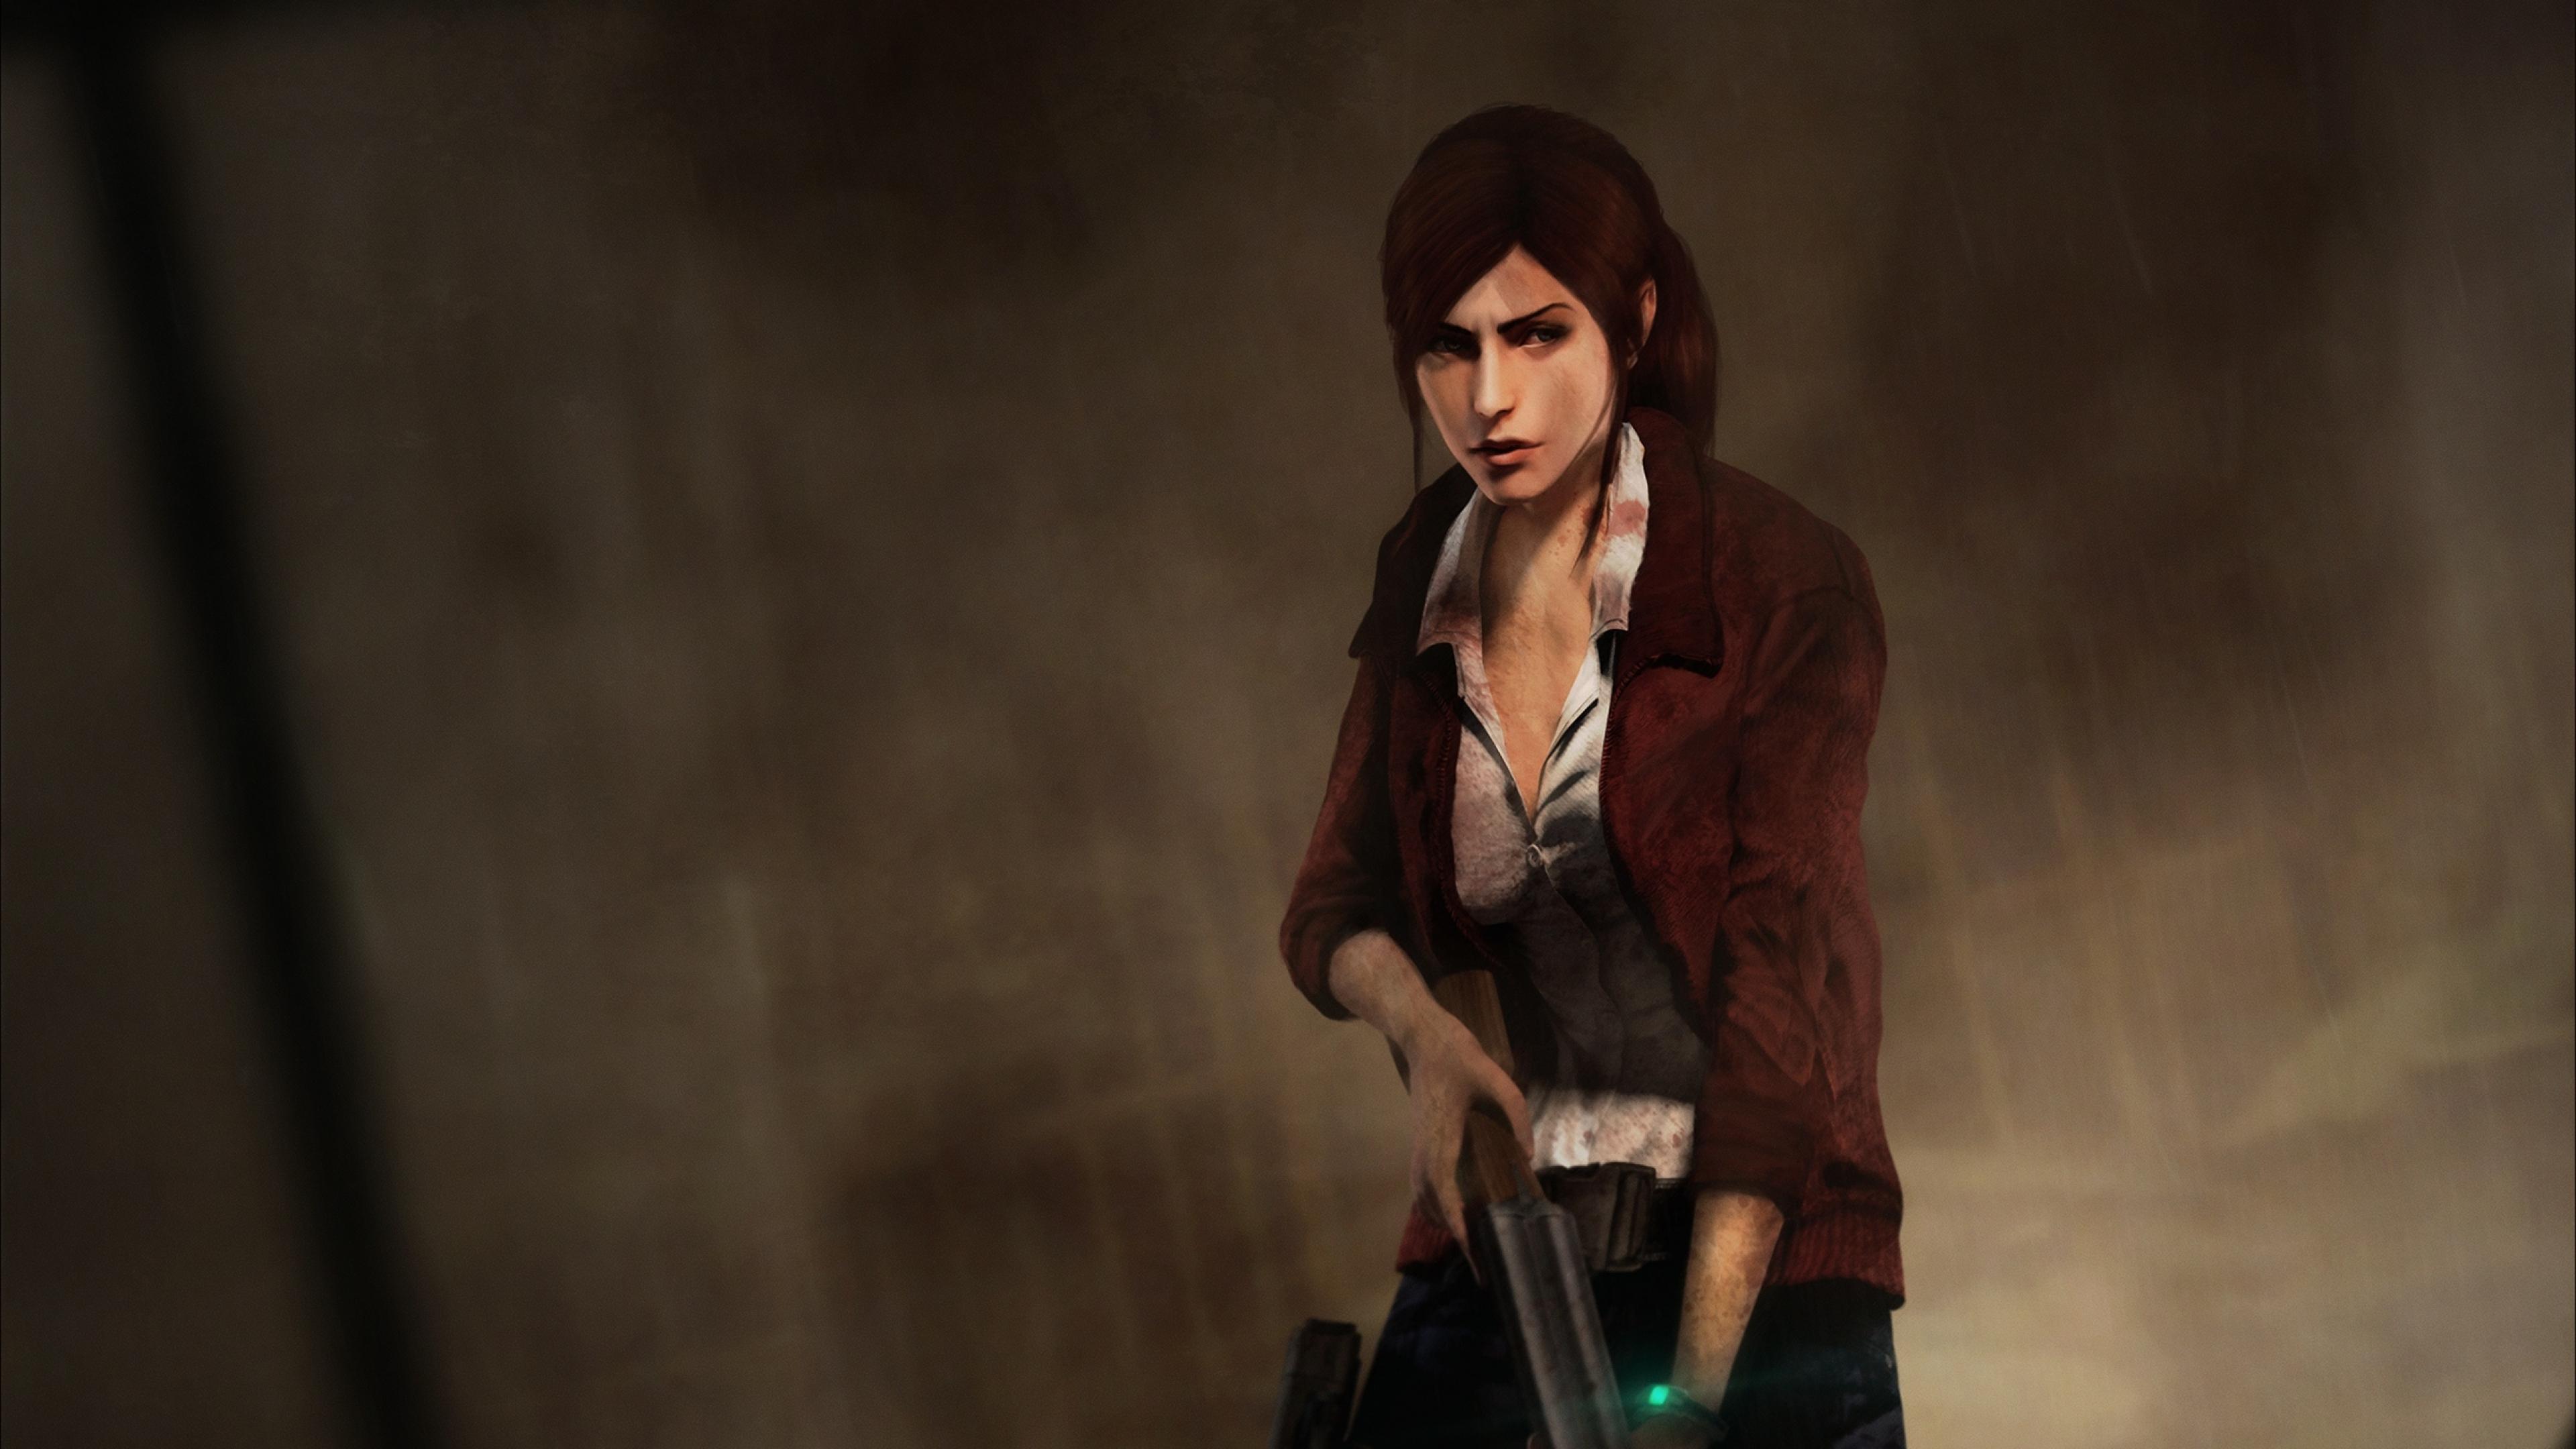 Resident Evil: Revelations 2 HD Wallpaper and Background